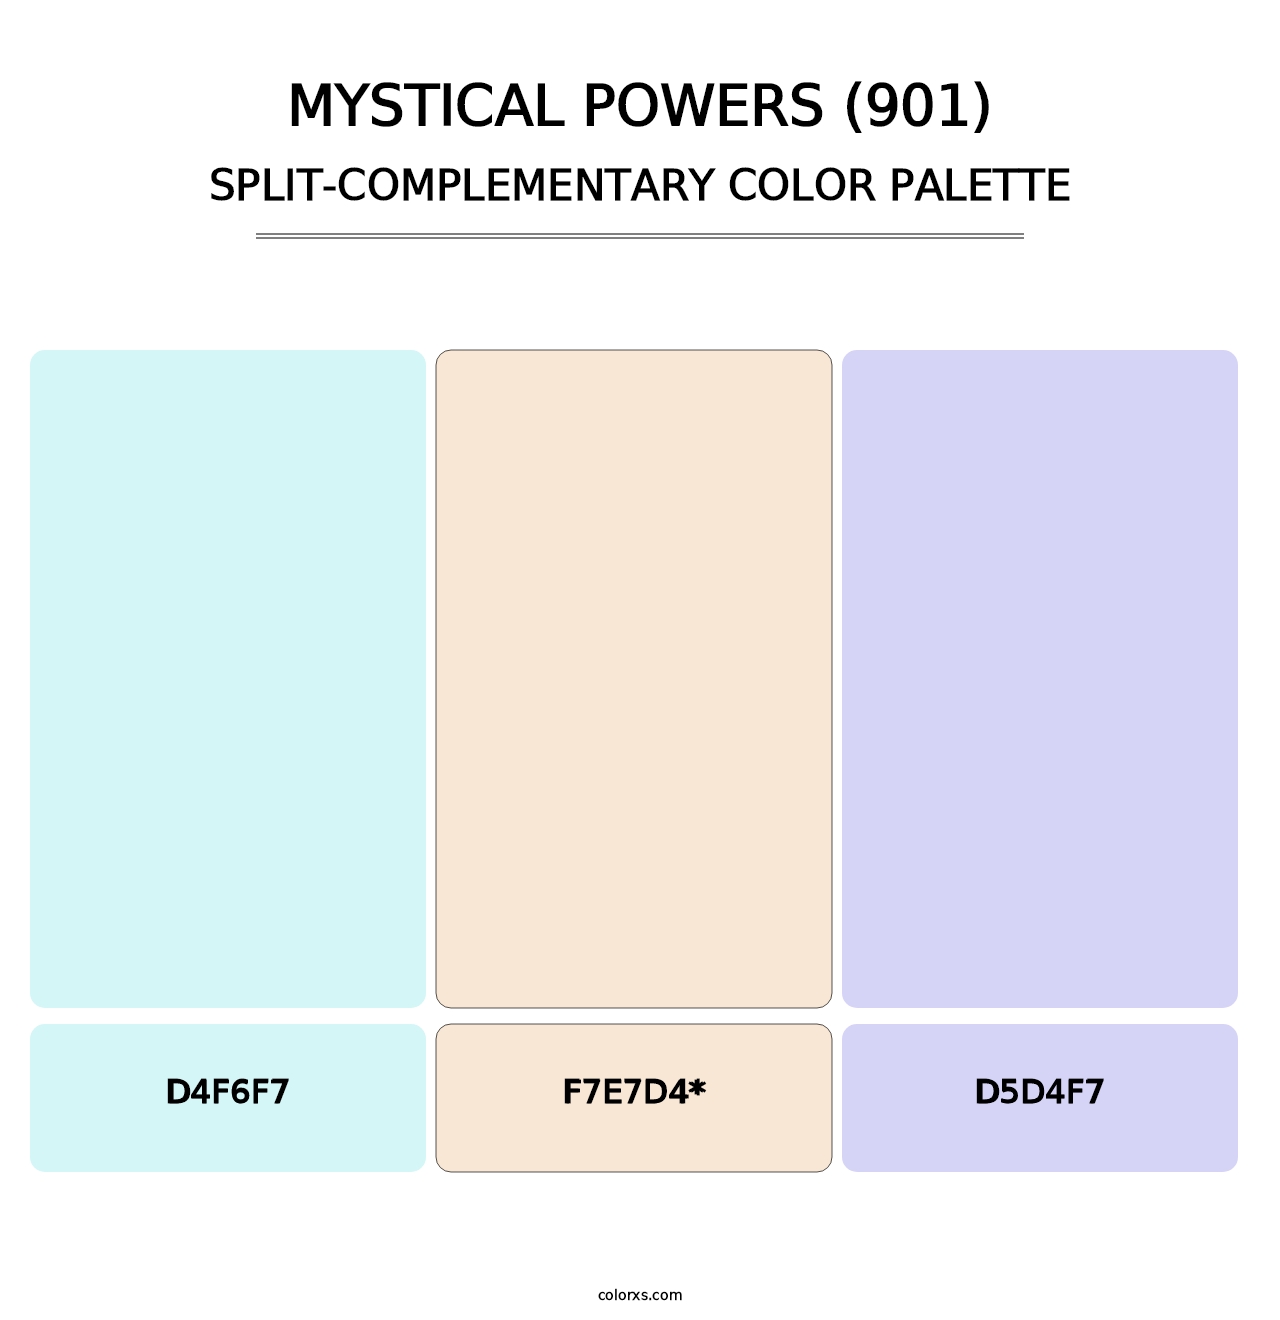 Mystical Powers (901) - Split-Complementary Color Palette